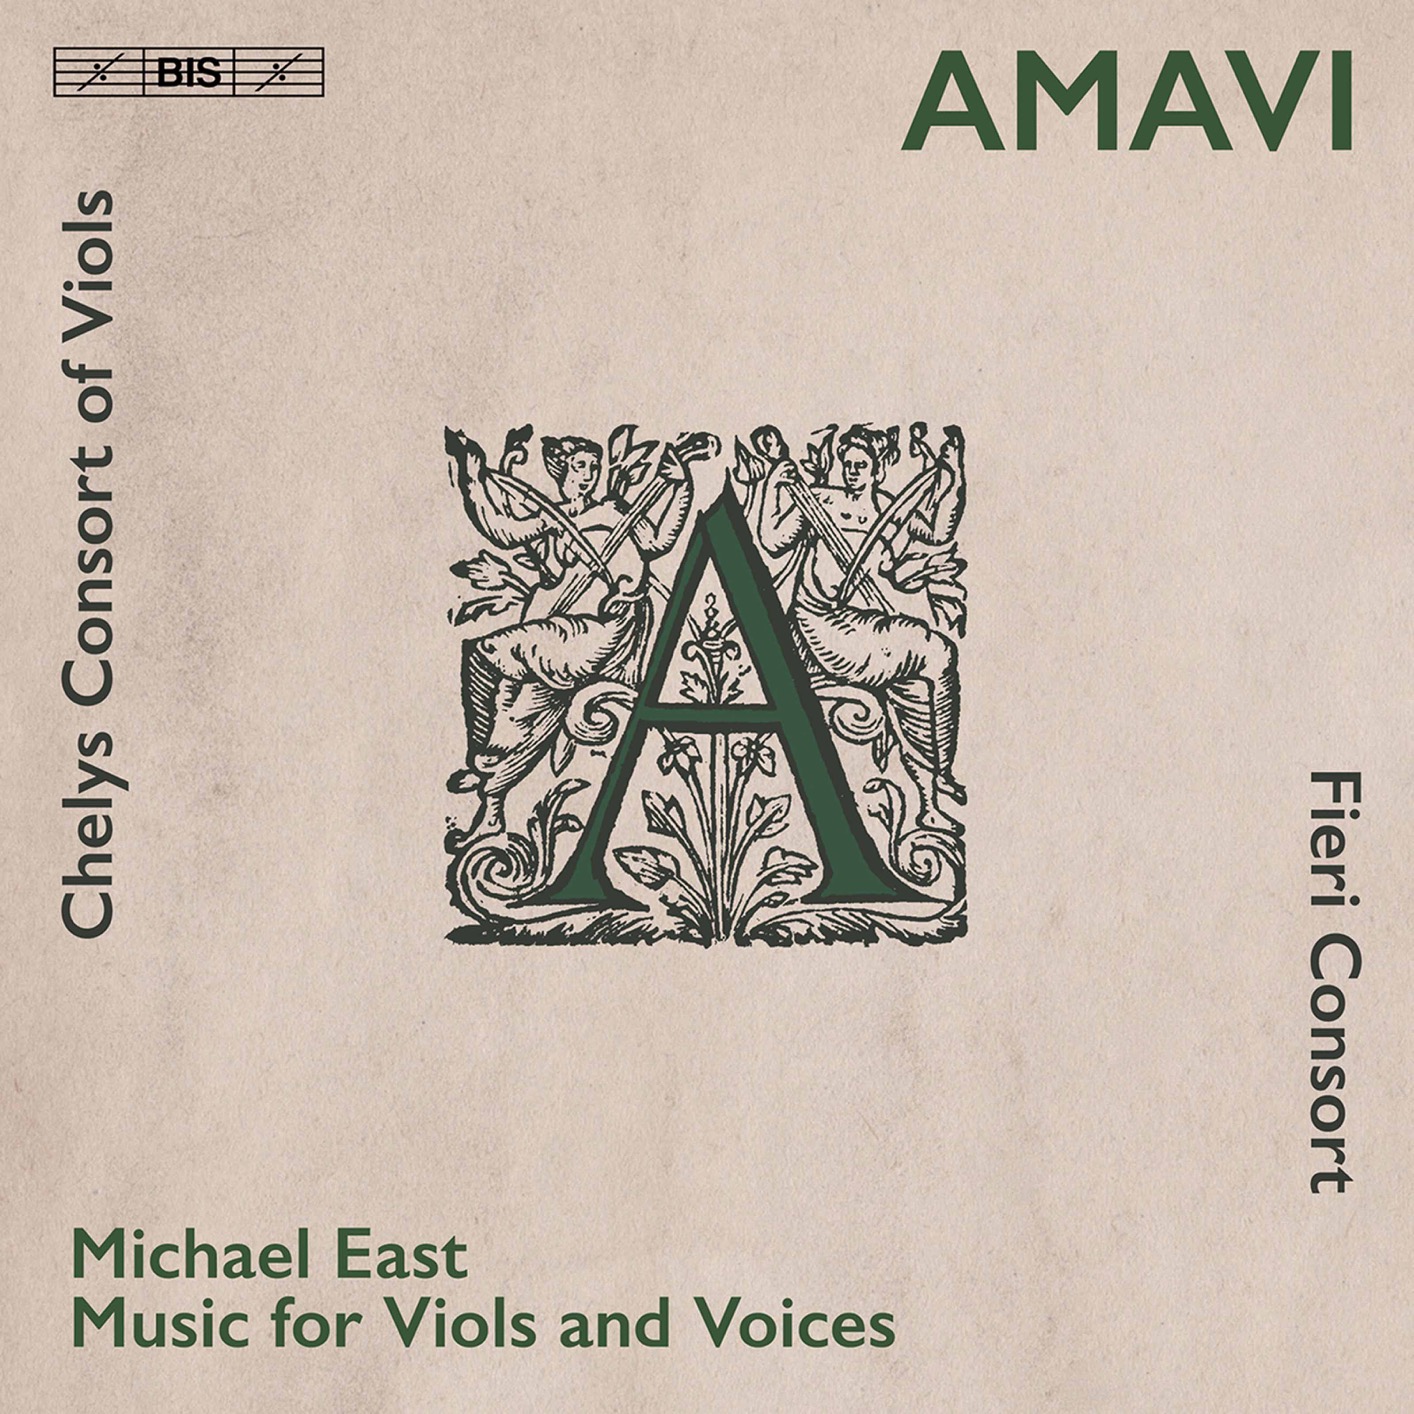 Chelys Consort of Viols, Fieri Consort - Amavi - Music for Viols & Voices by Michael East (2021) [FLAC 24bit/192kHz]